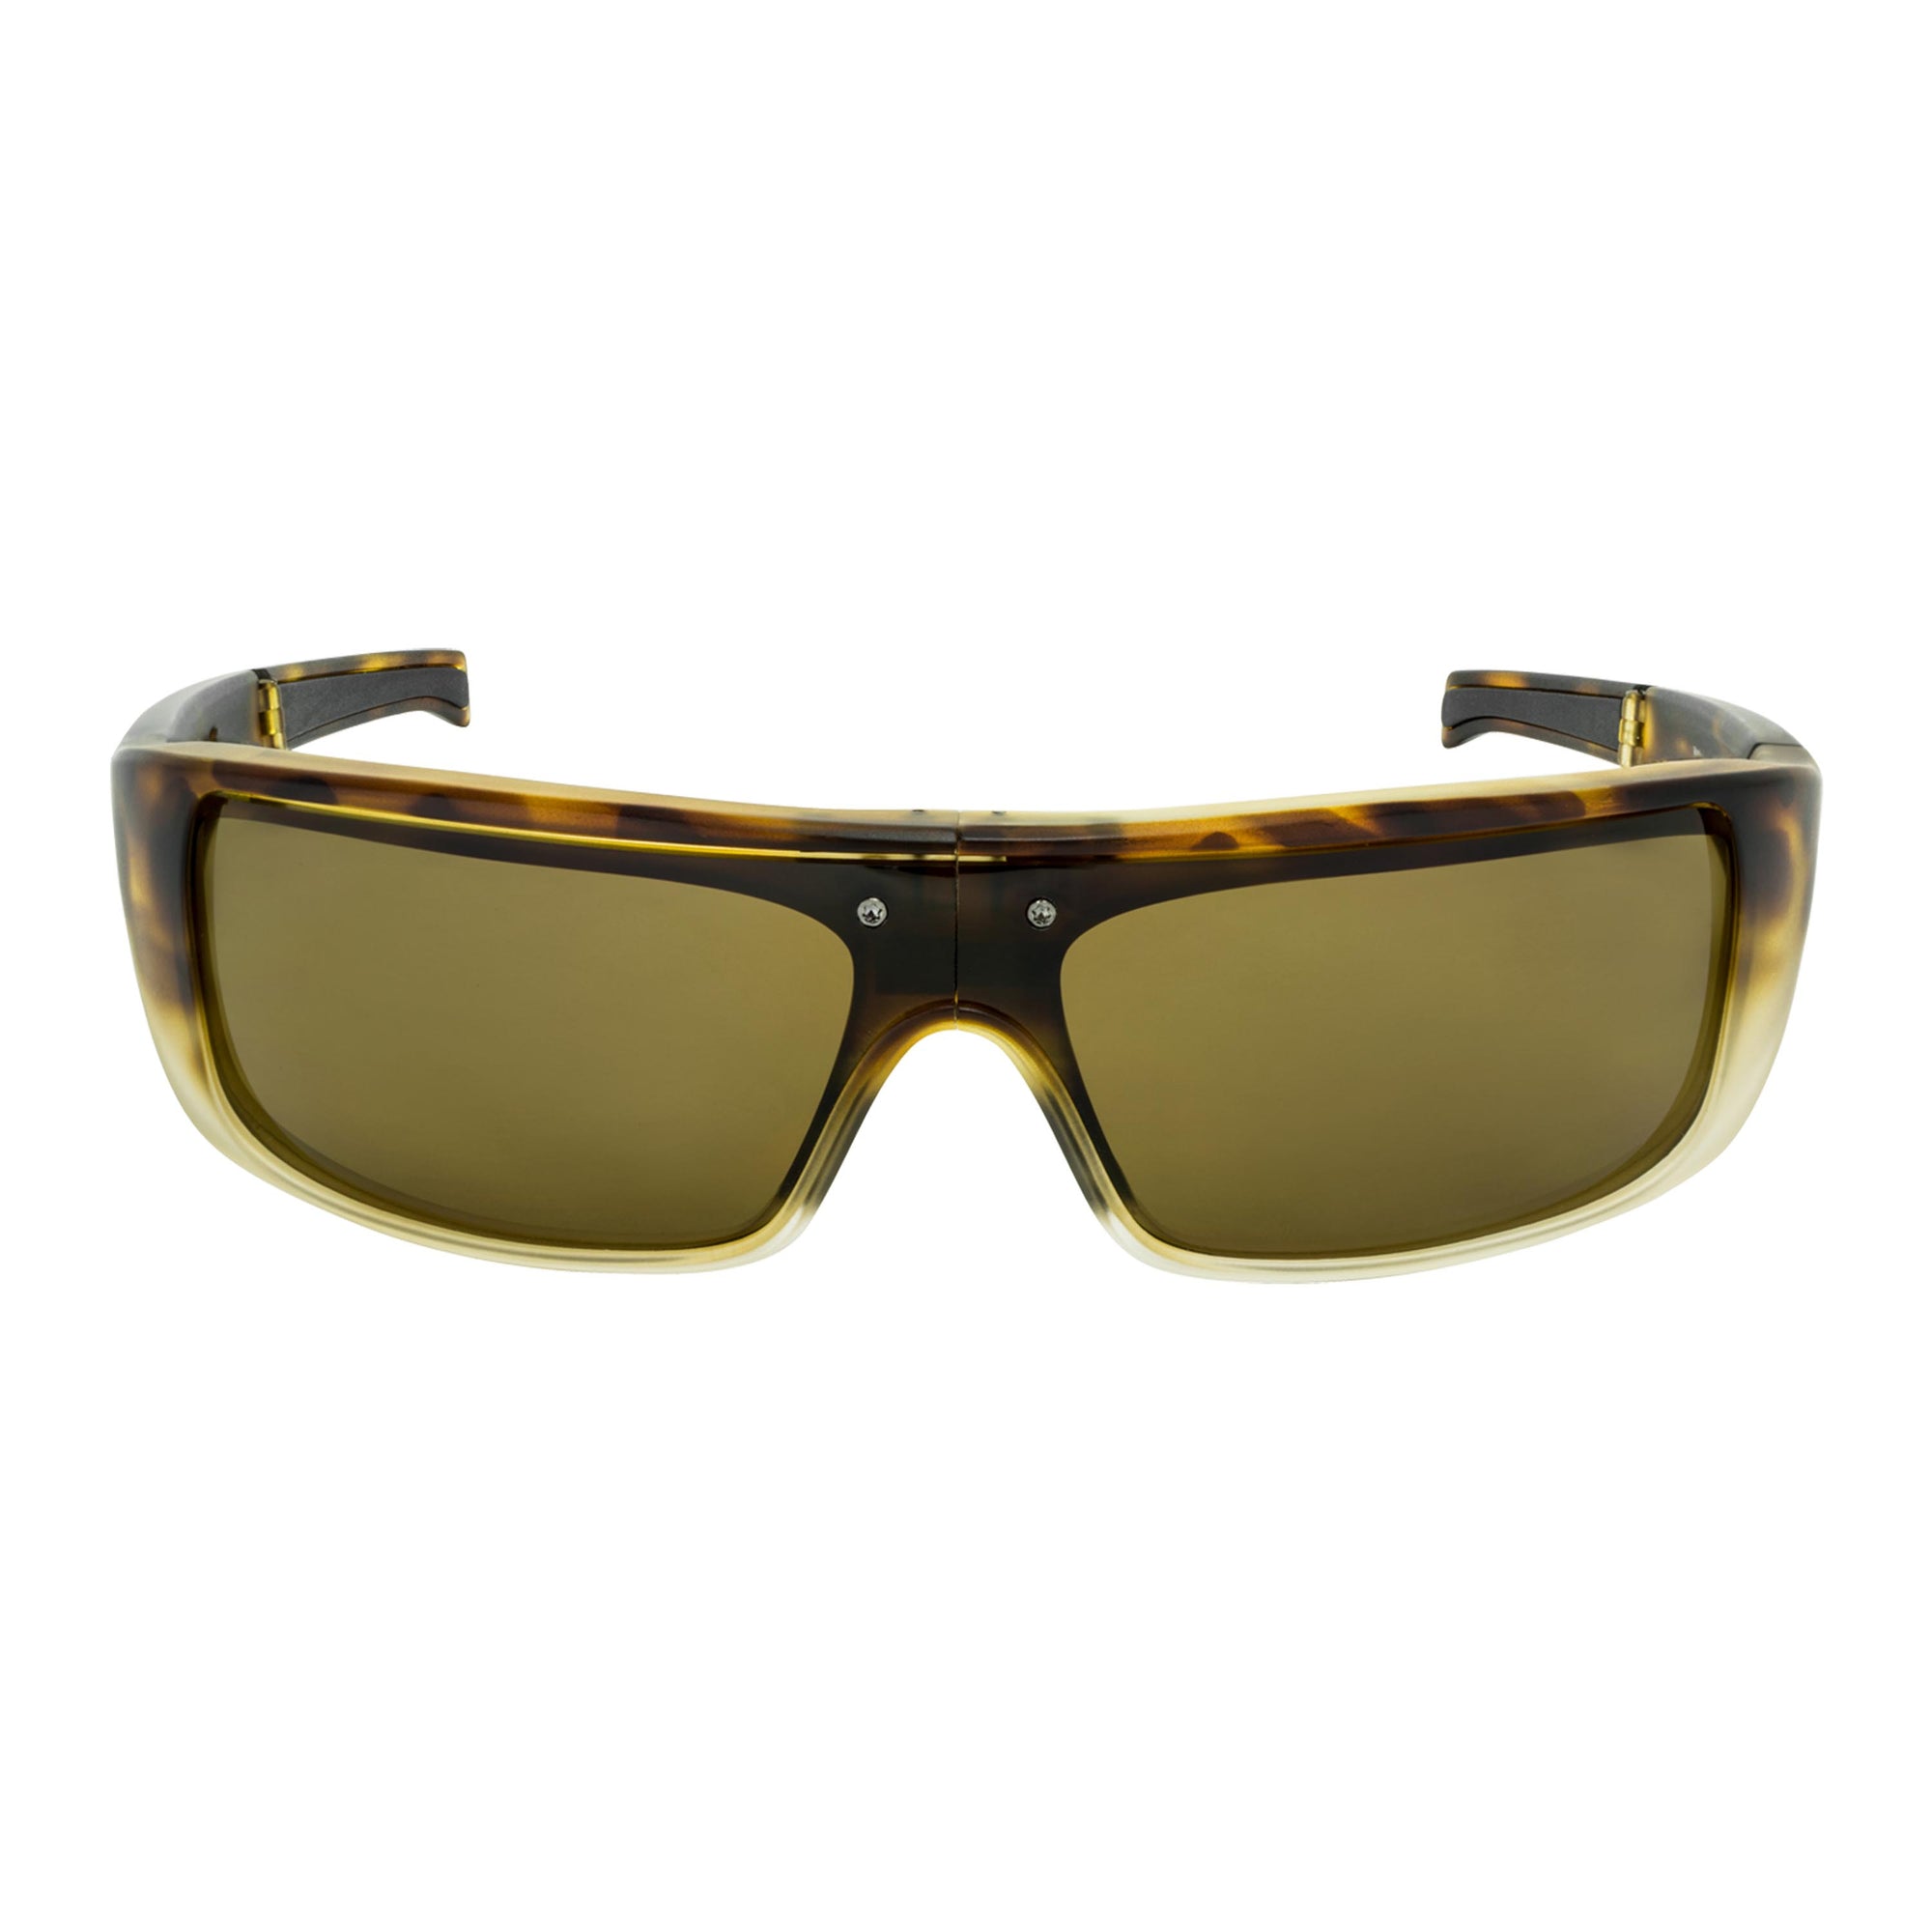 Popticals, Premium Compact Sunglasses, PopGear, 010050-BUNP, Polarized Sunglasses, Matte Tortoise Crystal Frames, Brown Lenses, Glam View